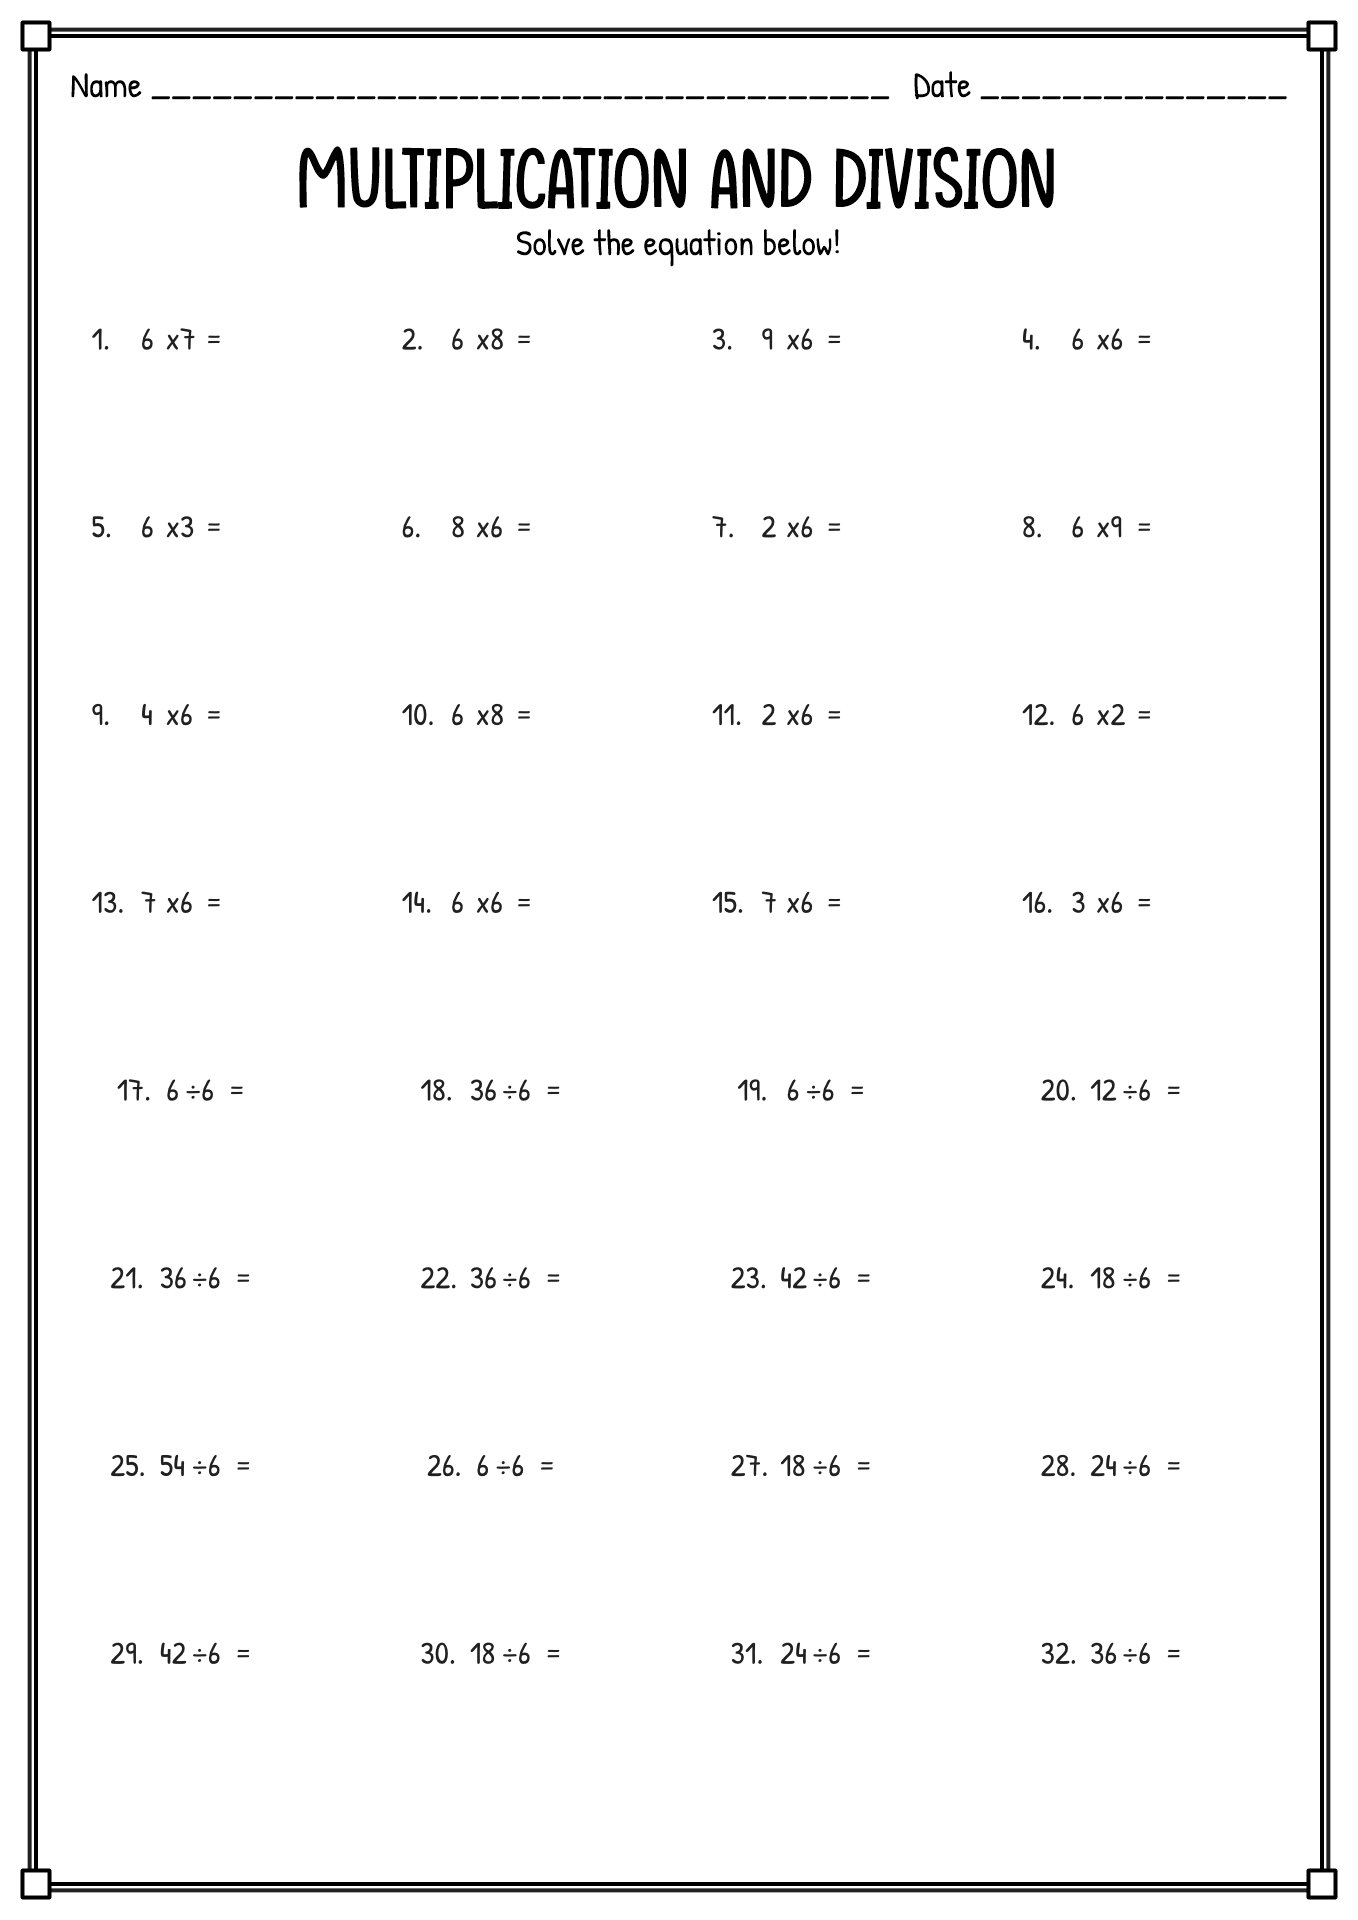 Basic Multiplication and Division Worksheets Image